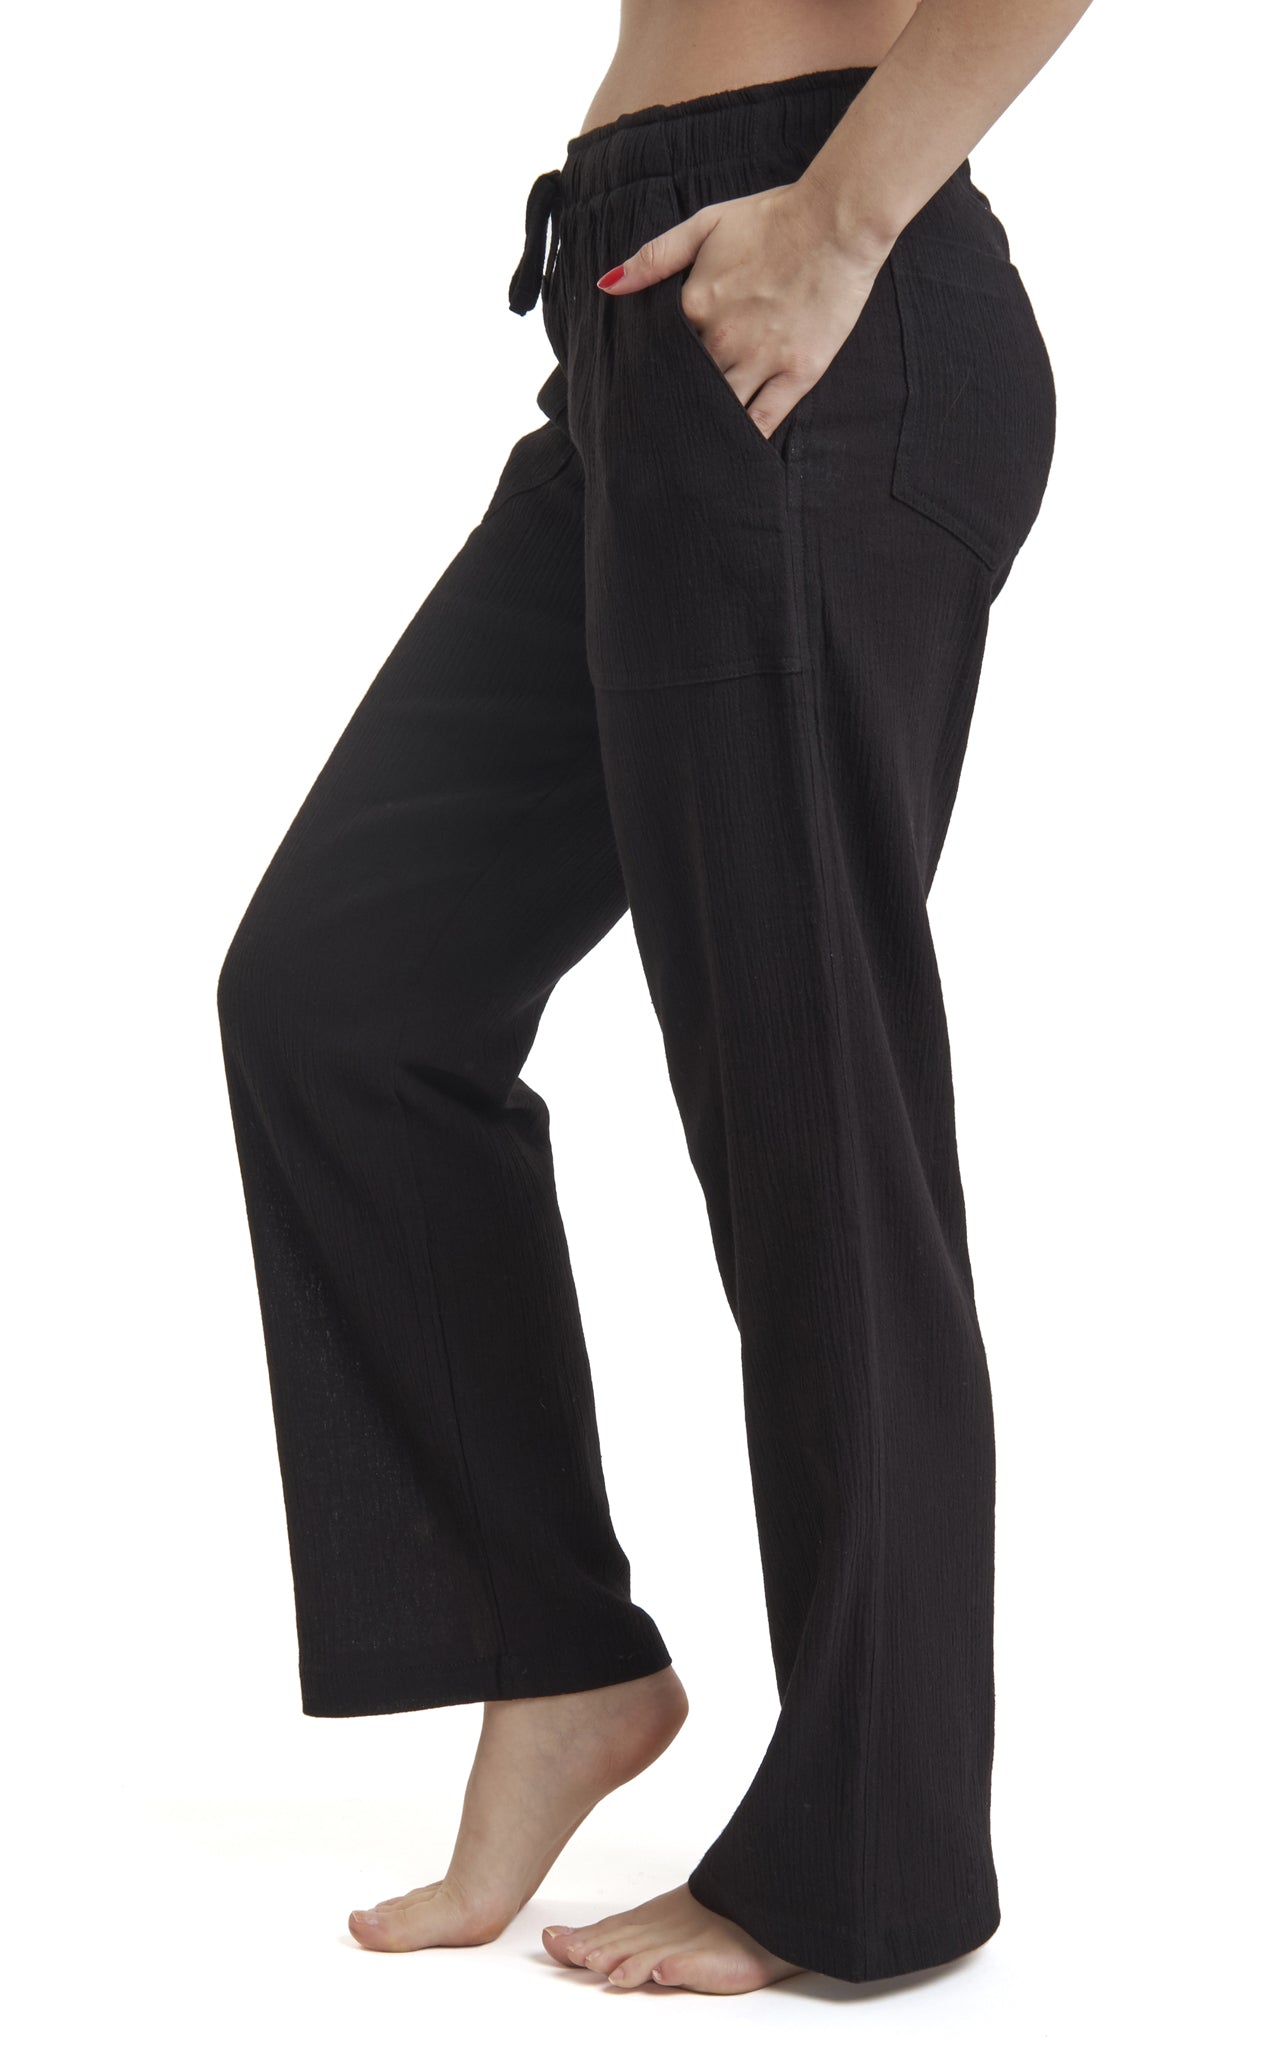 Women's Gauze Cotton PJ & Beach Pants with Pockets (Black)